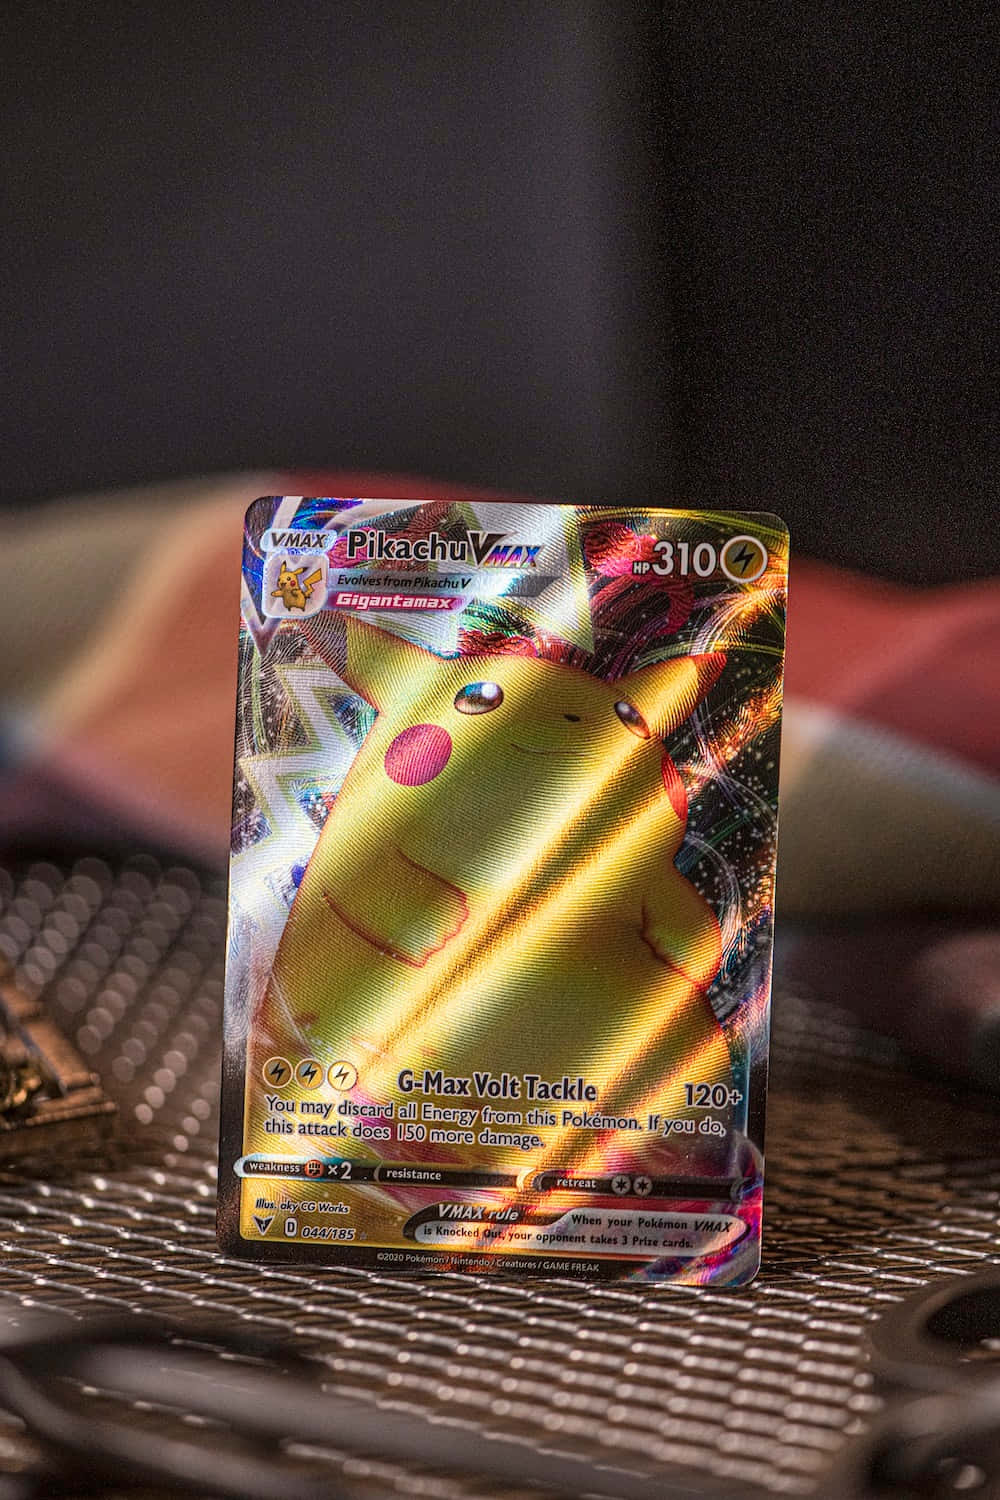 Fancy Pikachu Gigantamax Pokemon Card Background